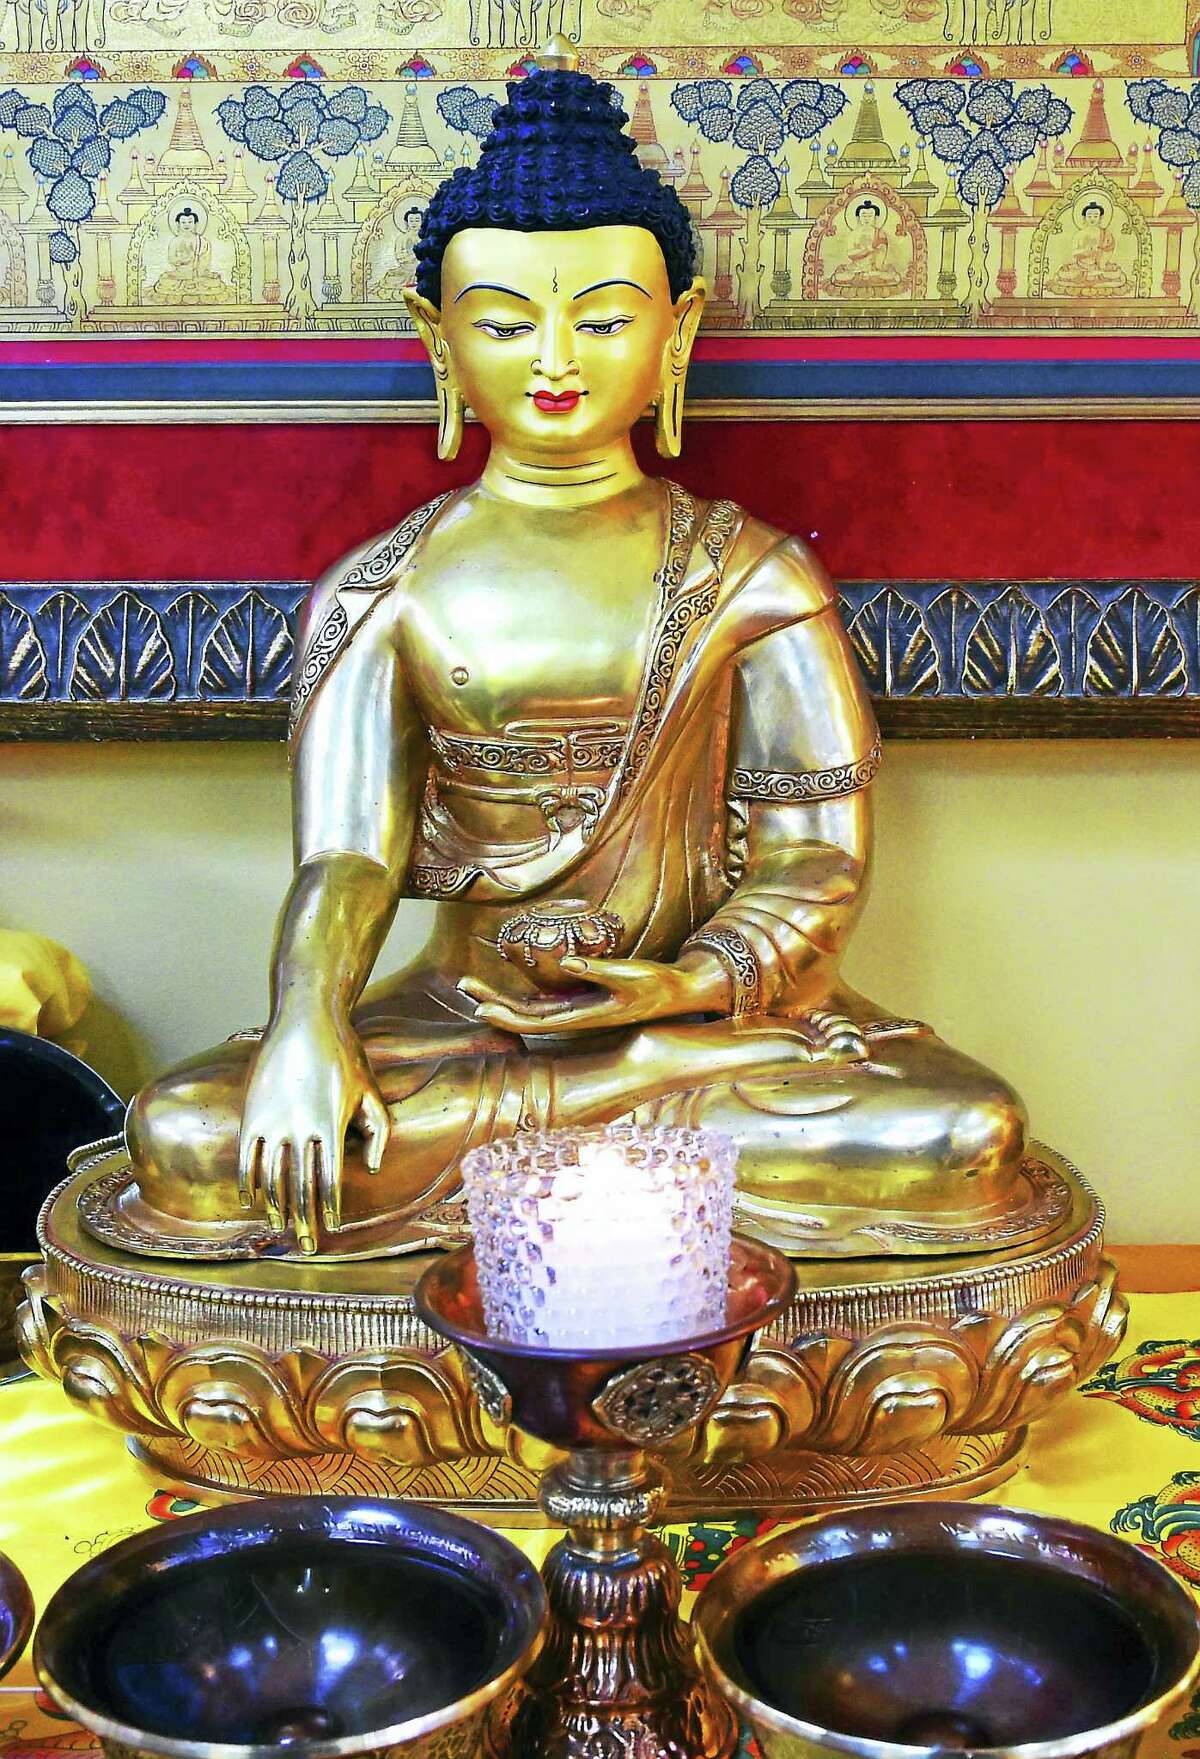 A sculpture of the Buddha Shakyamuni at the Buddhist Meditation Center of Guilford.